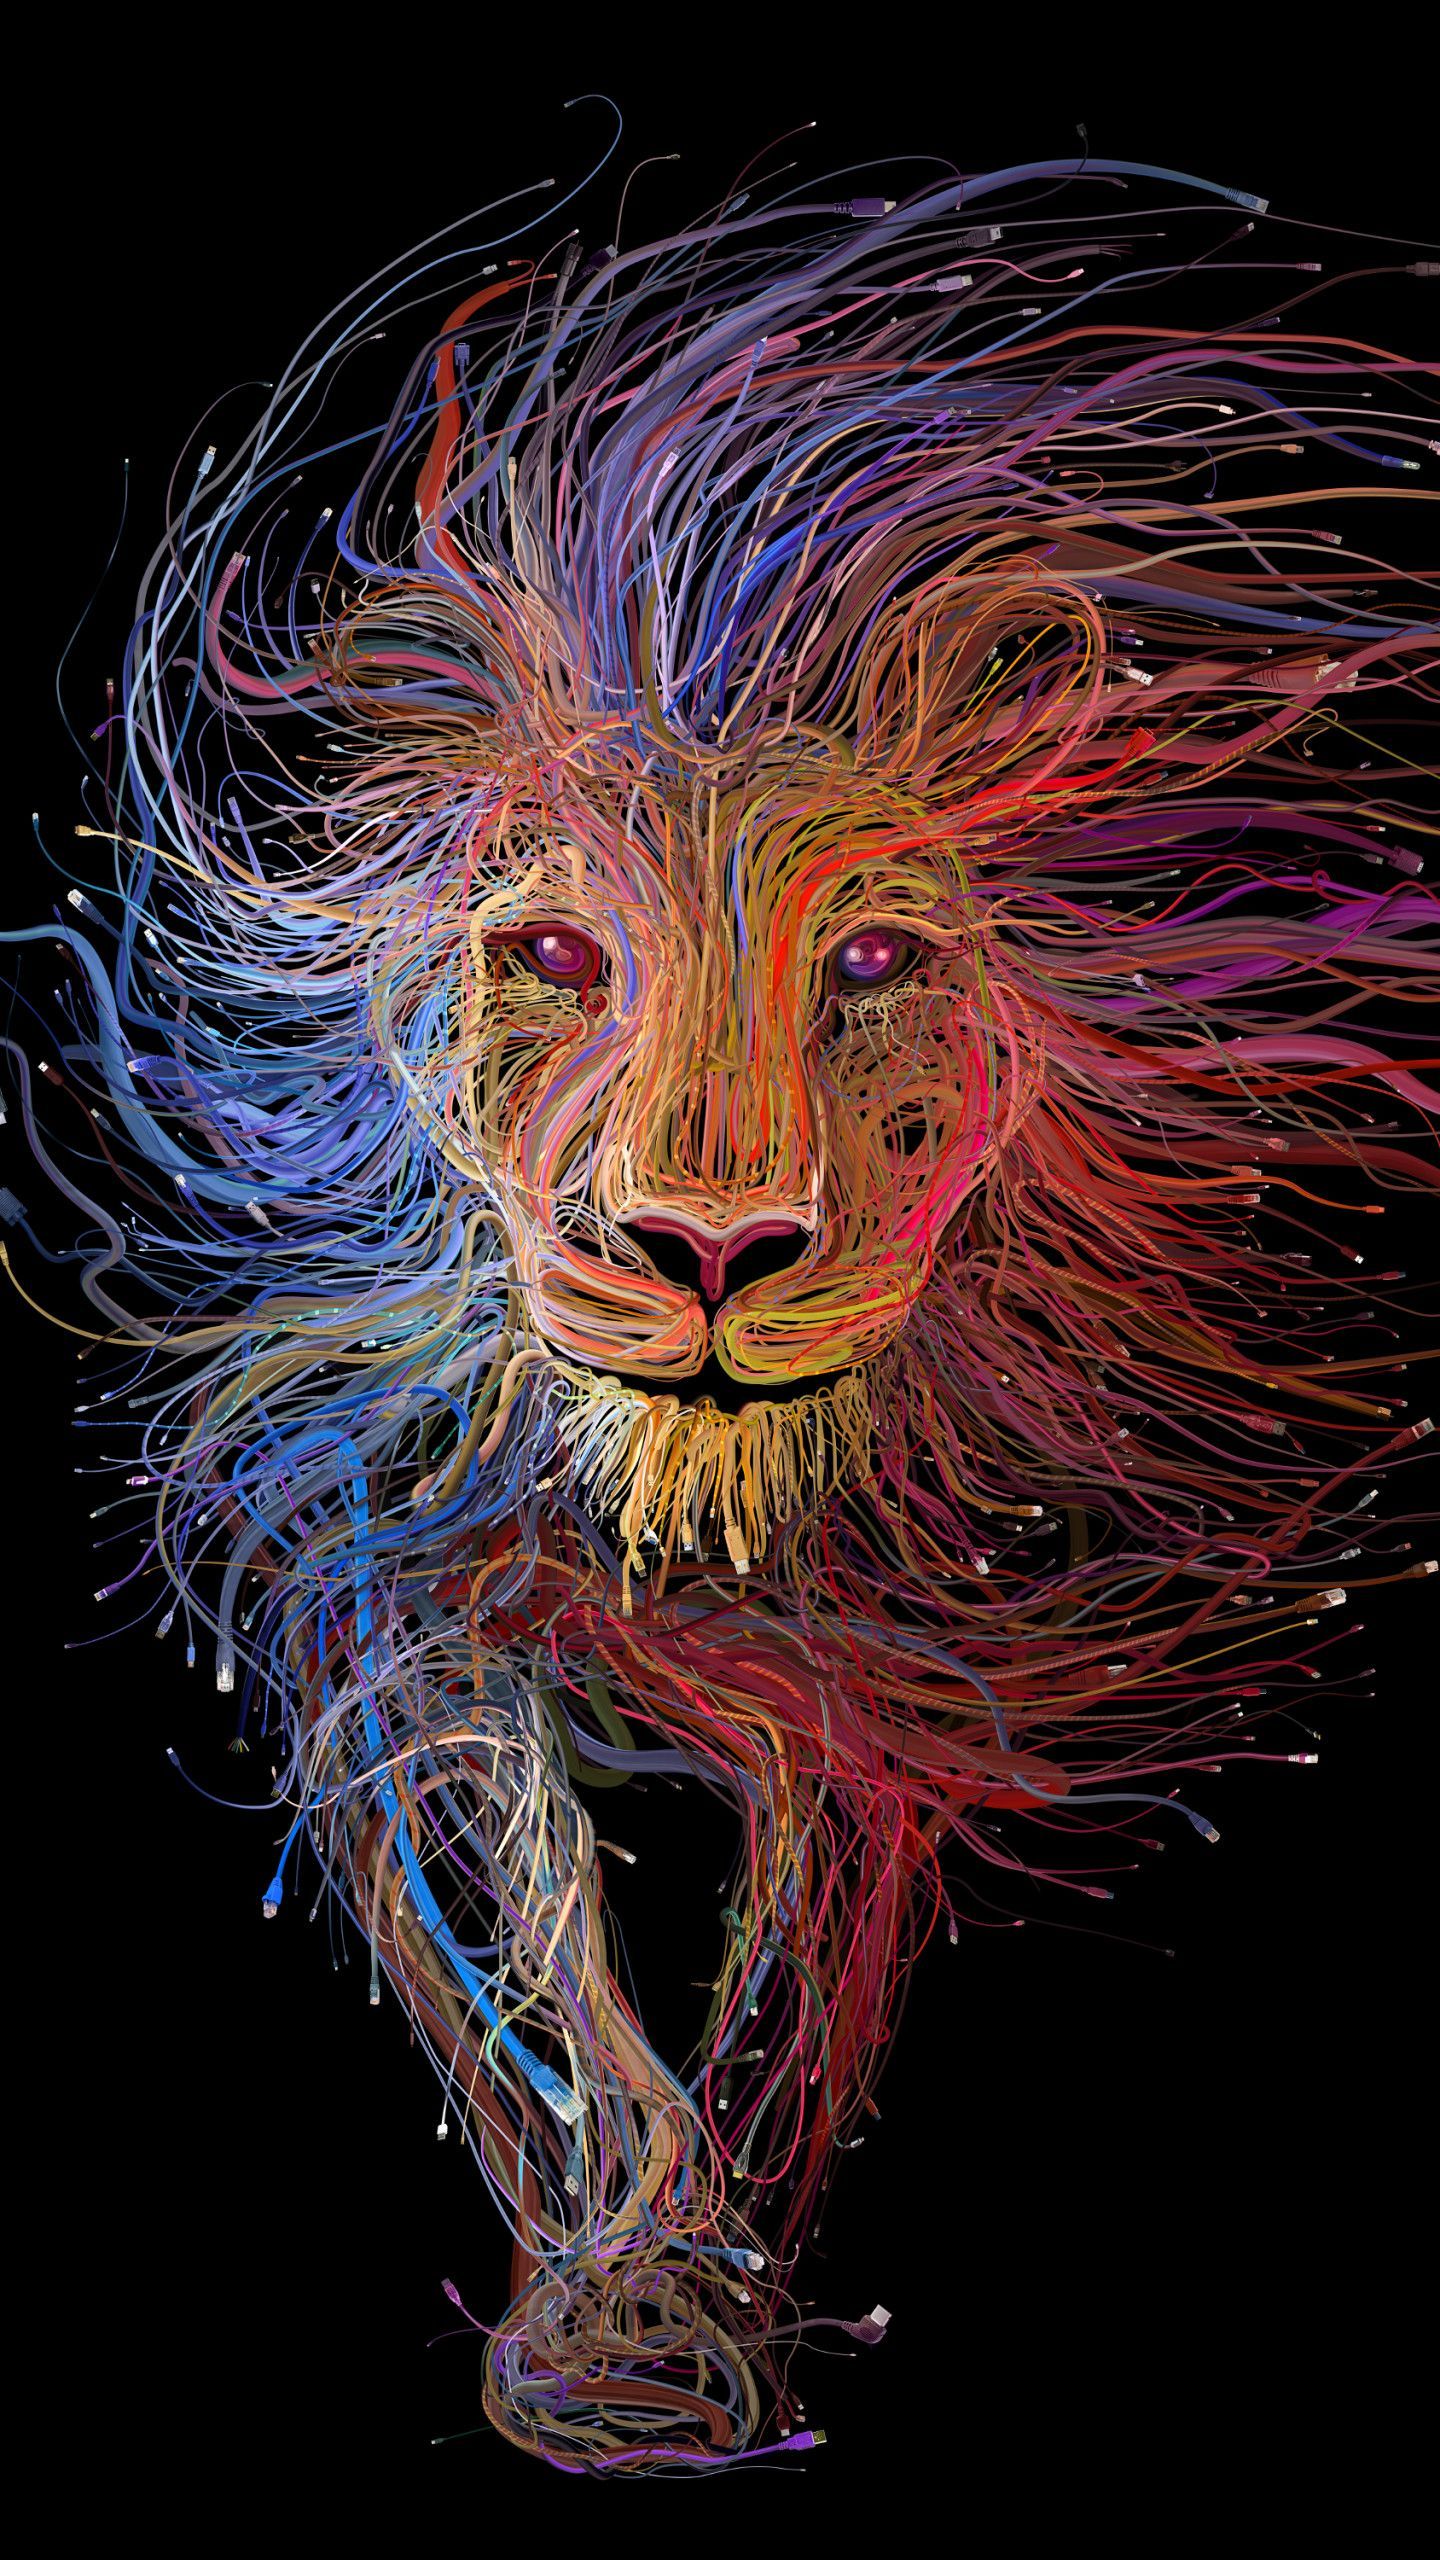 Colorful Lion Wallpaper on .com